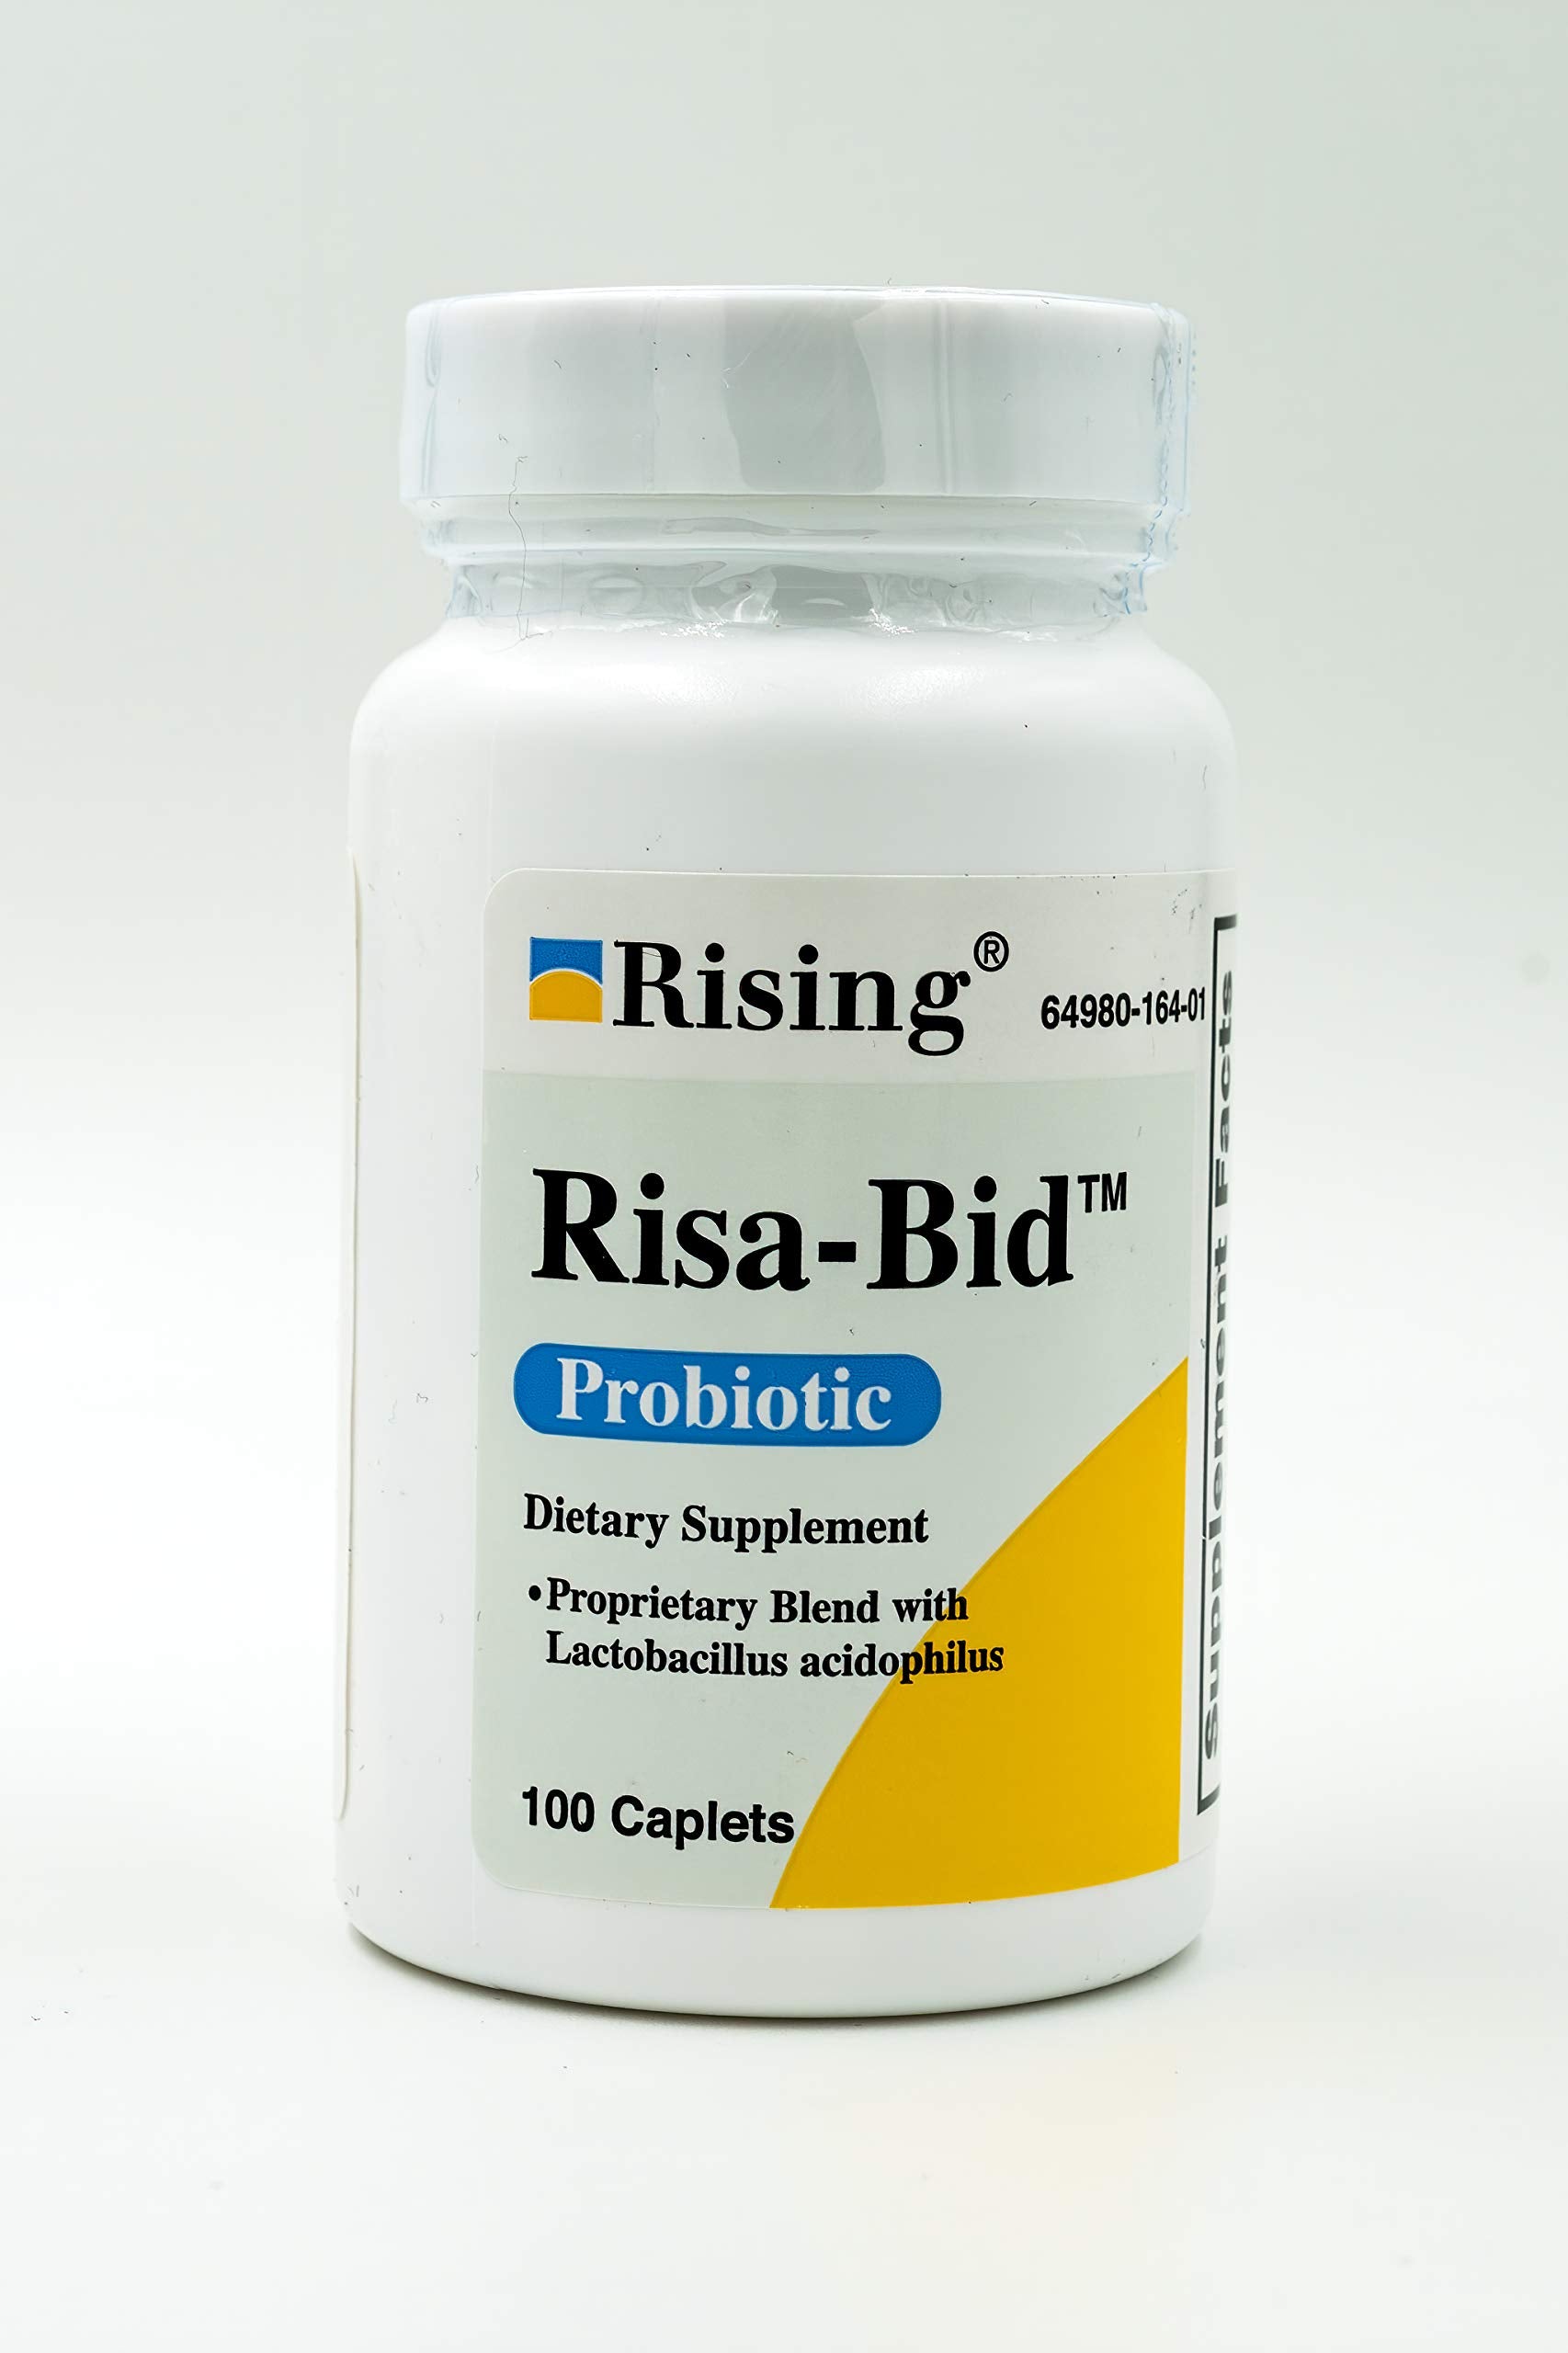 Rising Pharma - Risa-Bid Caplets - Probiotic Dietary Supplements - 100 caplets